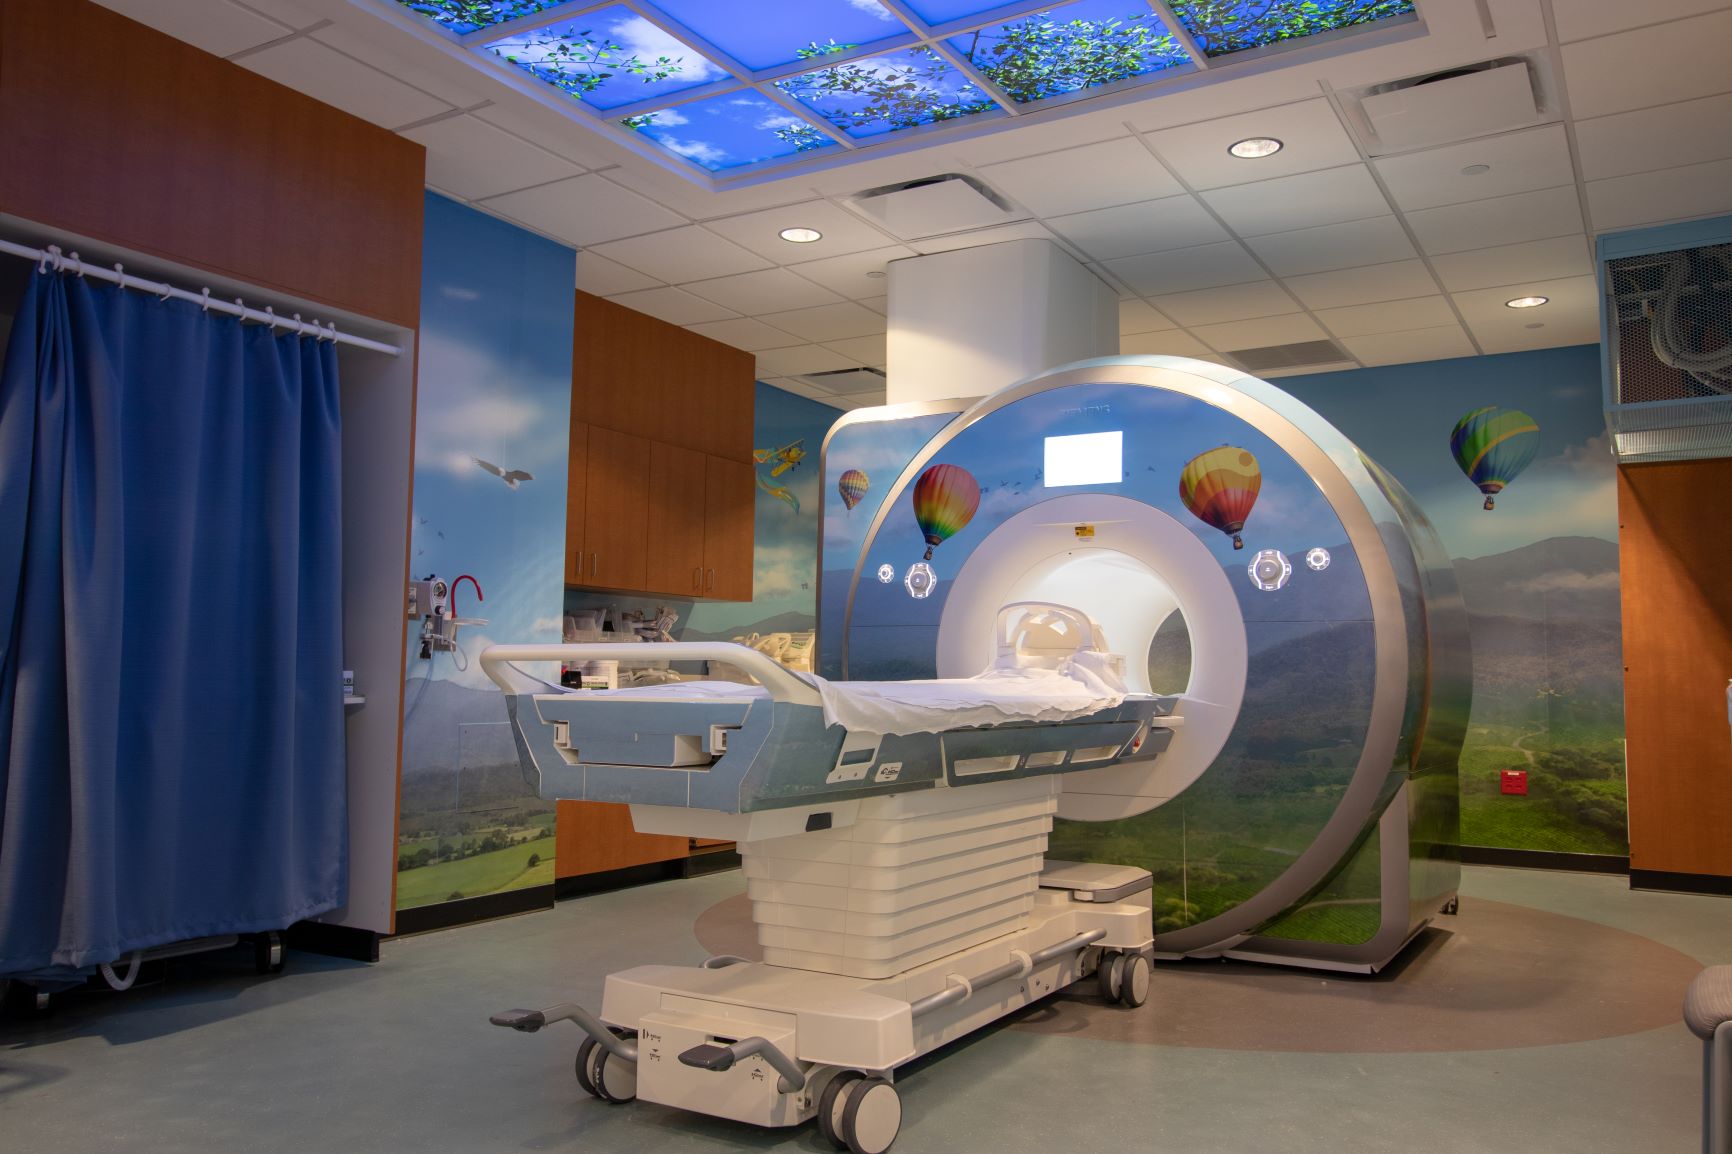 Fetal Magnetic Resonance Imaging